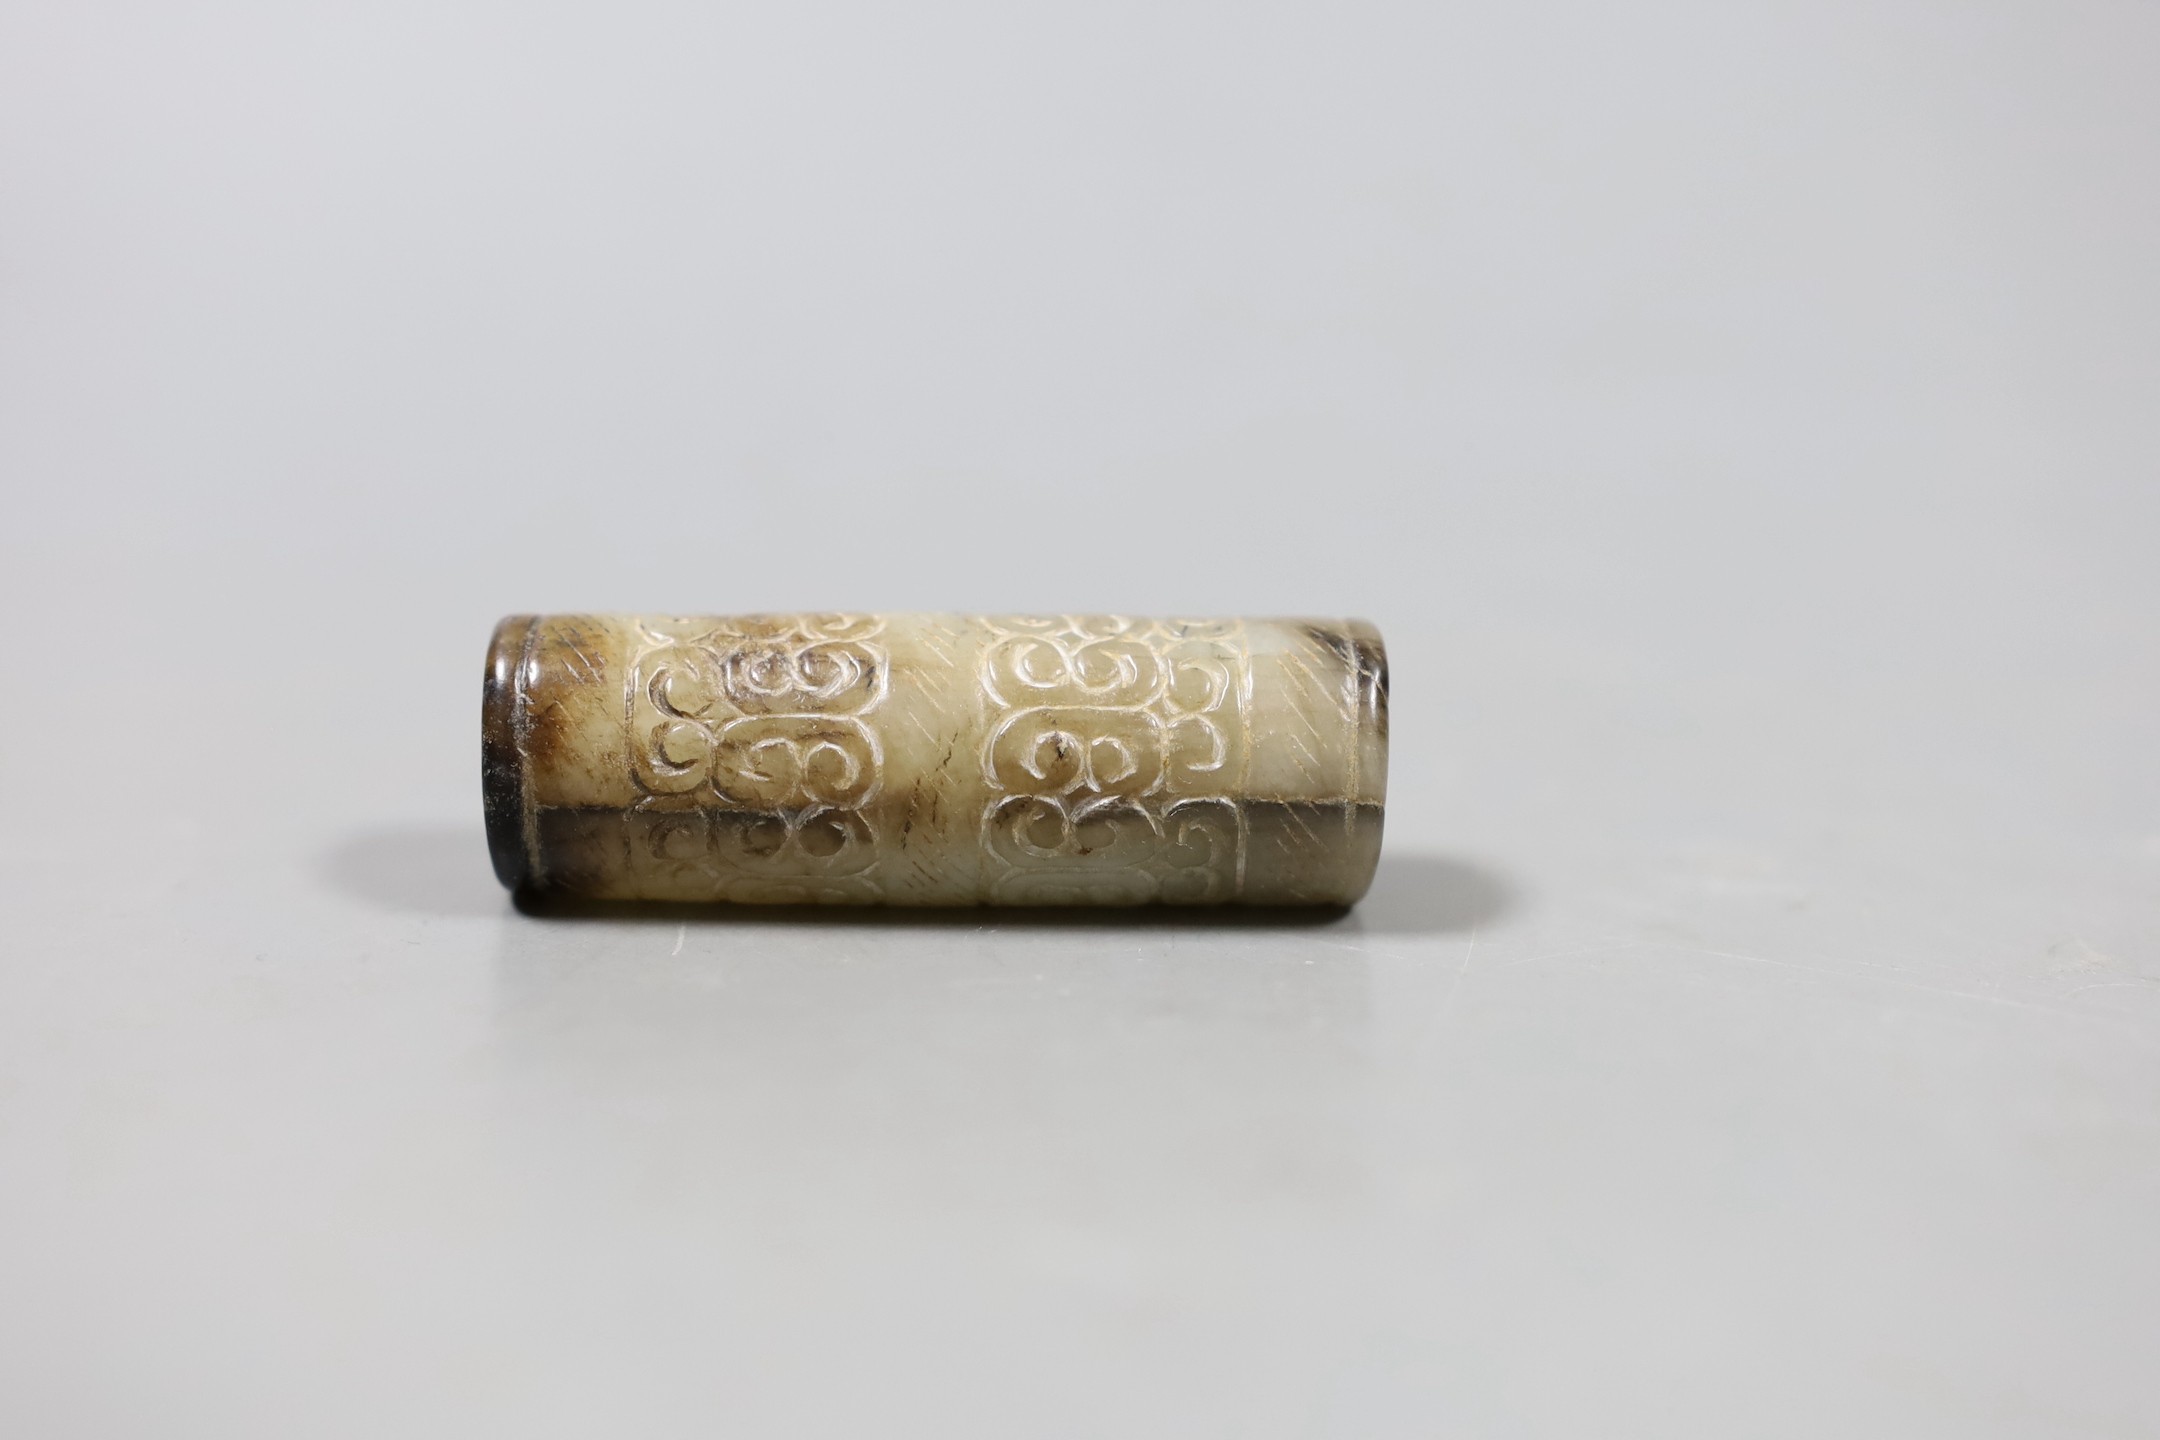 A Chinese archaistic white and black jade cylinder bead, 5.8 cm, boxed and a Chinese archaistic jade large bi disc, 13 cm diameter